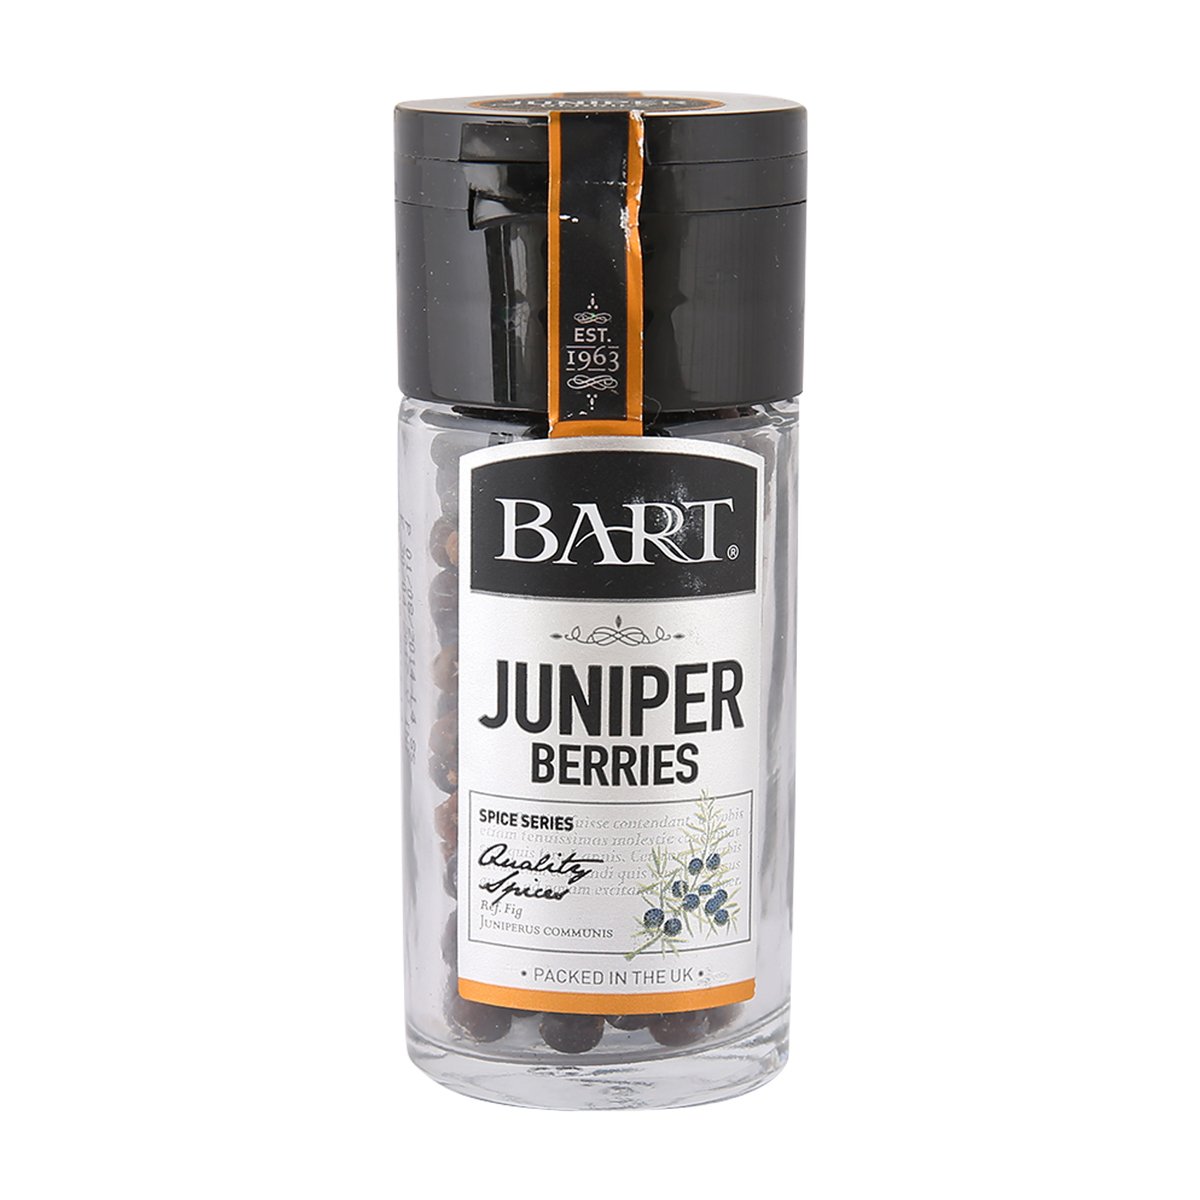 Bart Juniper Berries 25 g